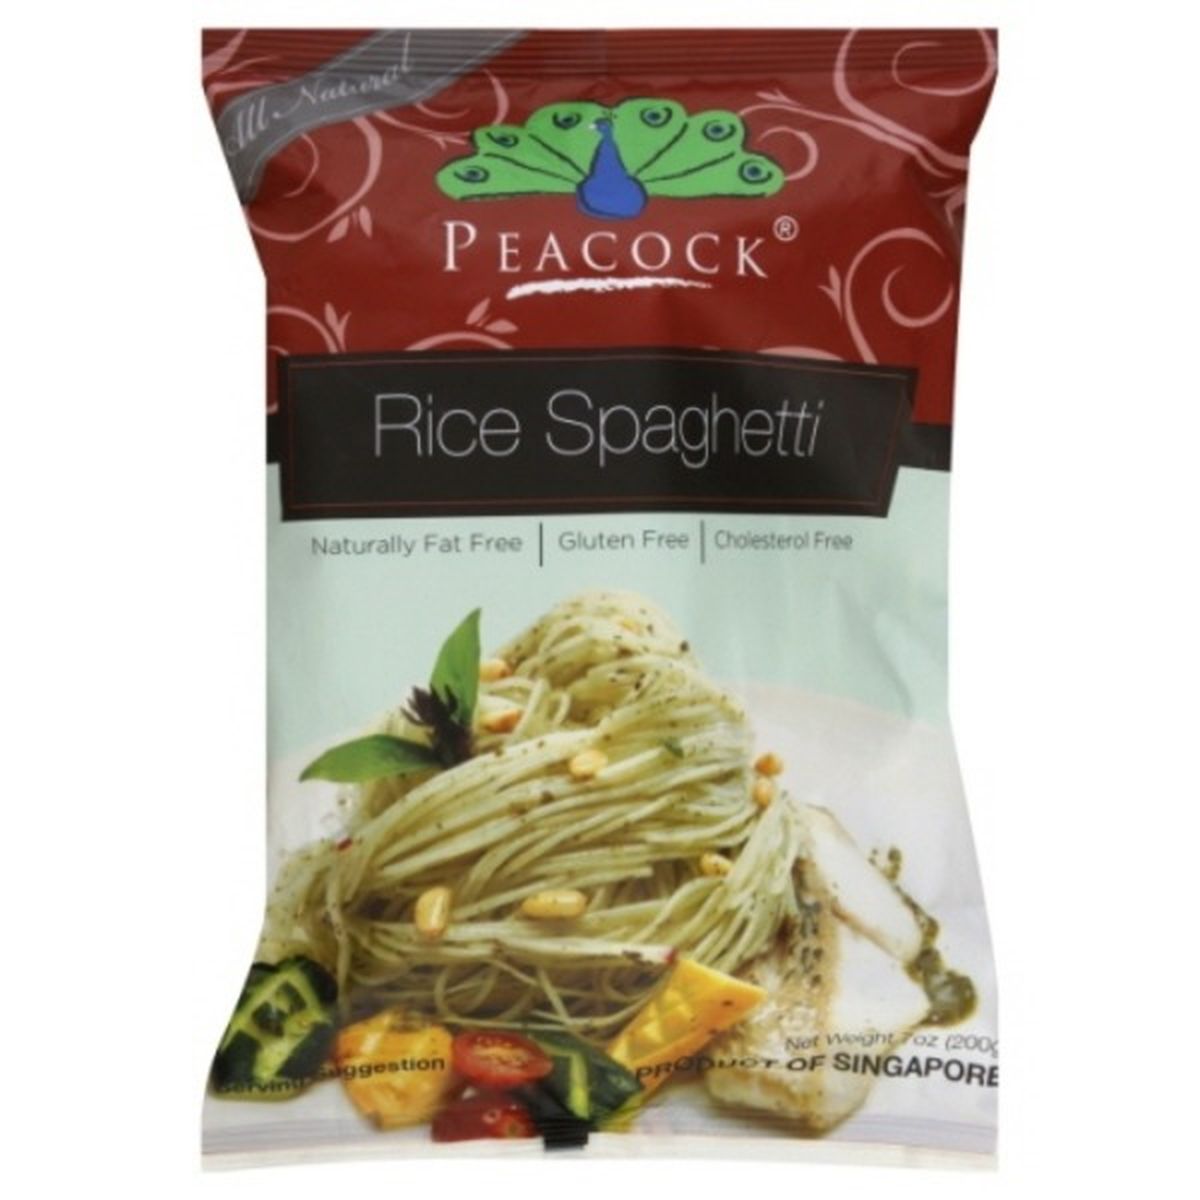 Calories in PEACOCK Rice Spaghetti